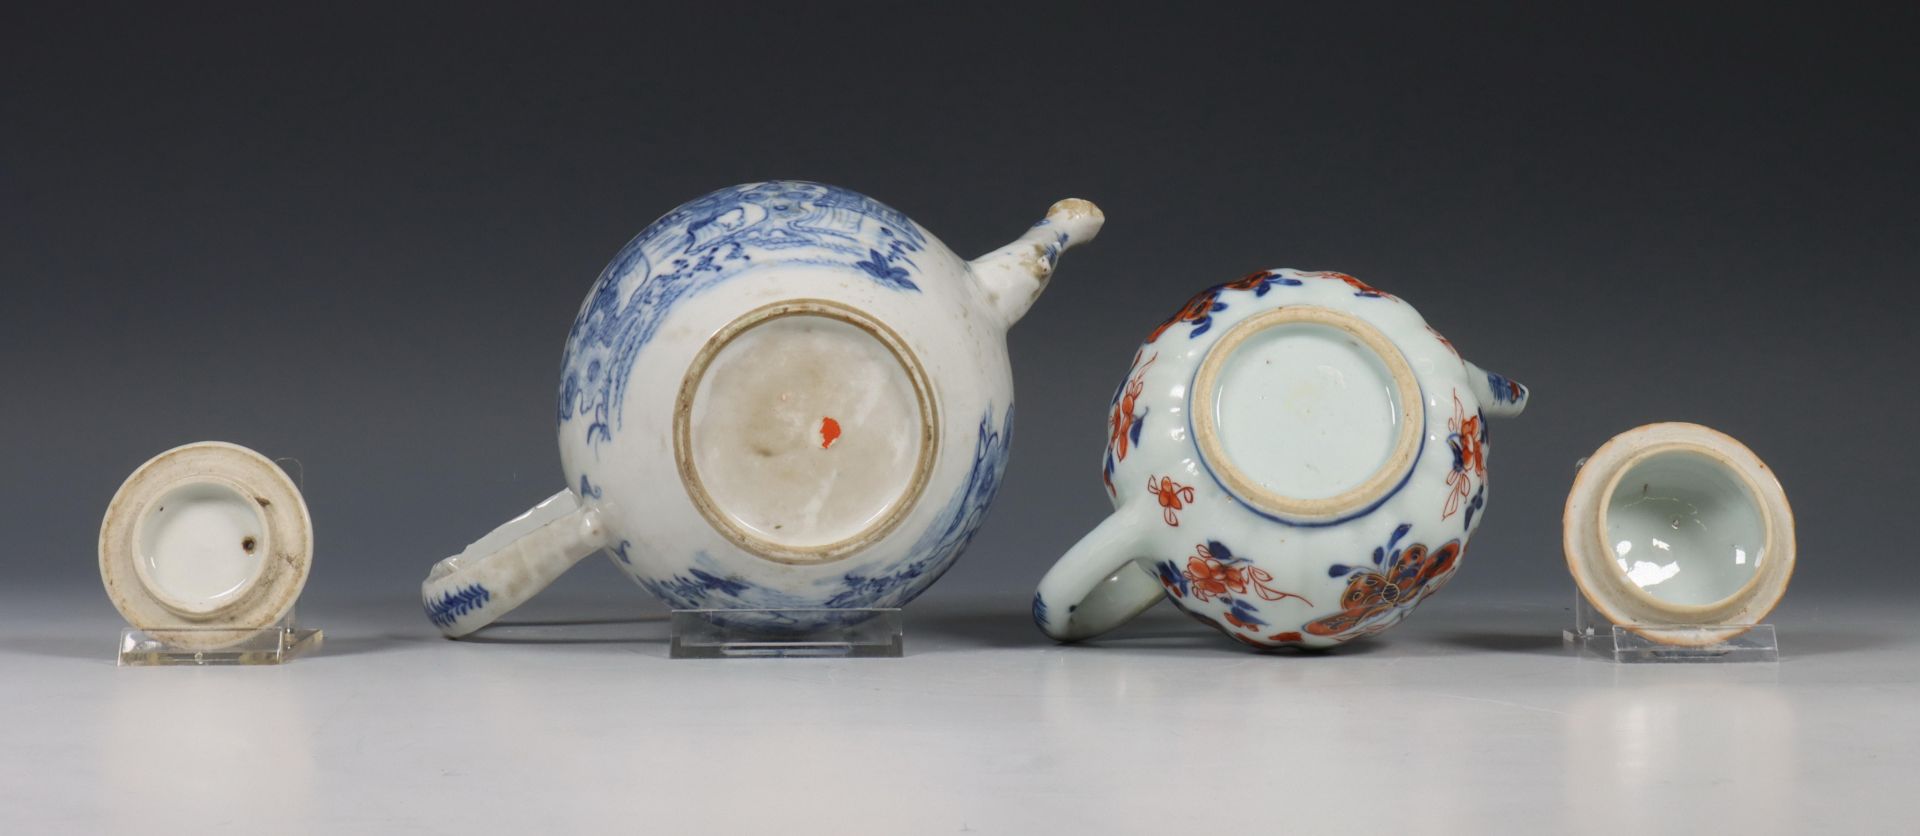 China, blauw-wit porseleinen en een Imari porseleinen theepot, 18e eeuw, - Bild 2 aus 7